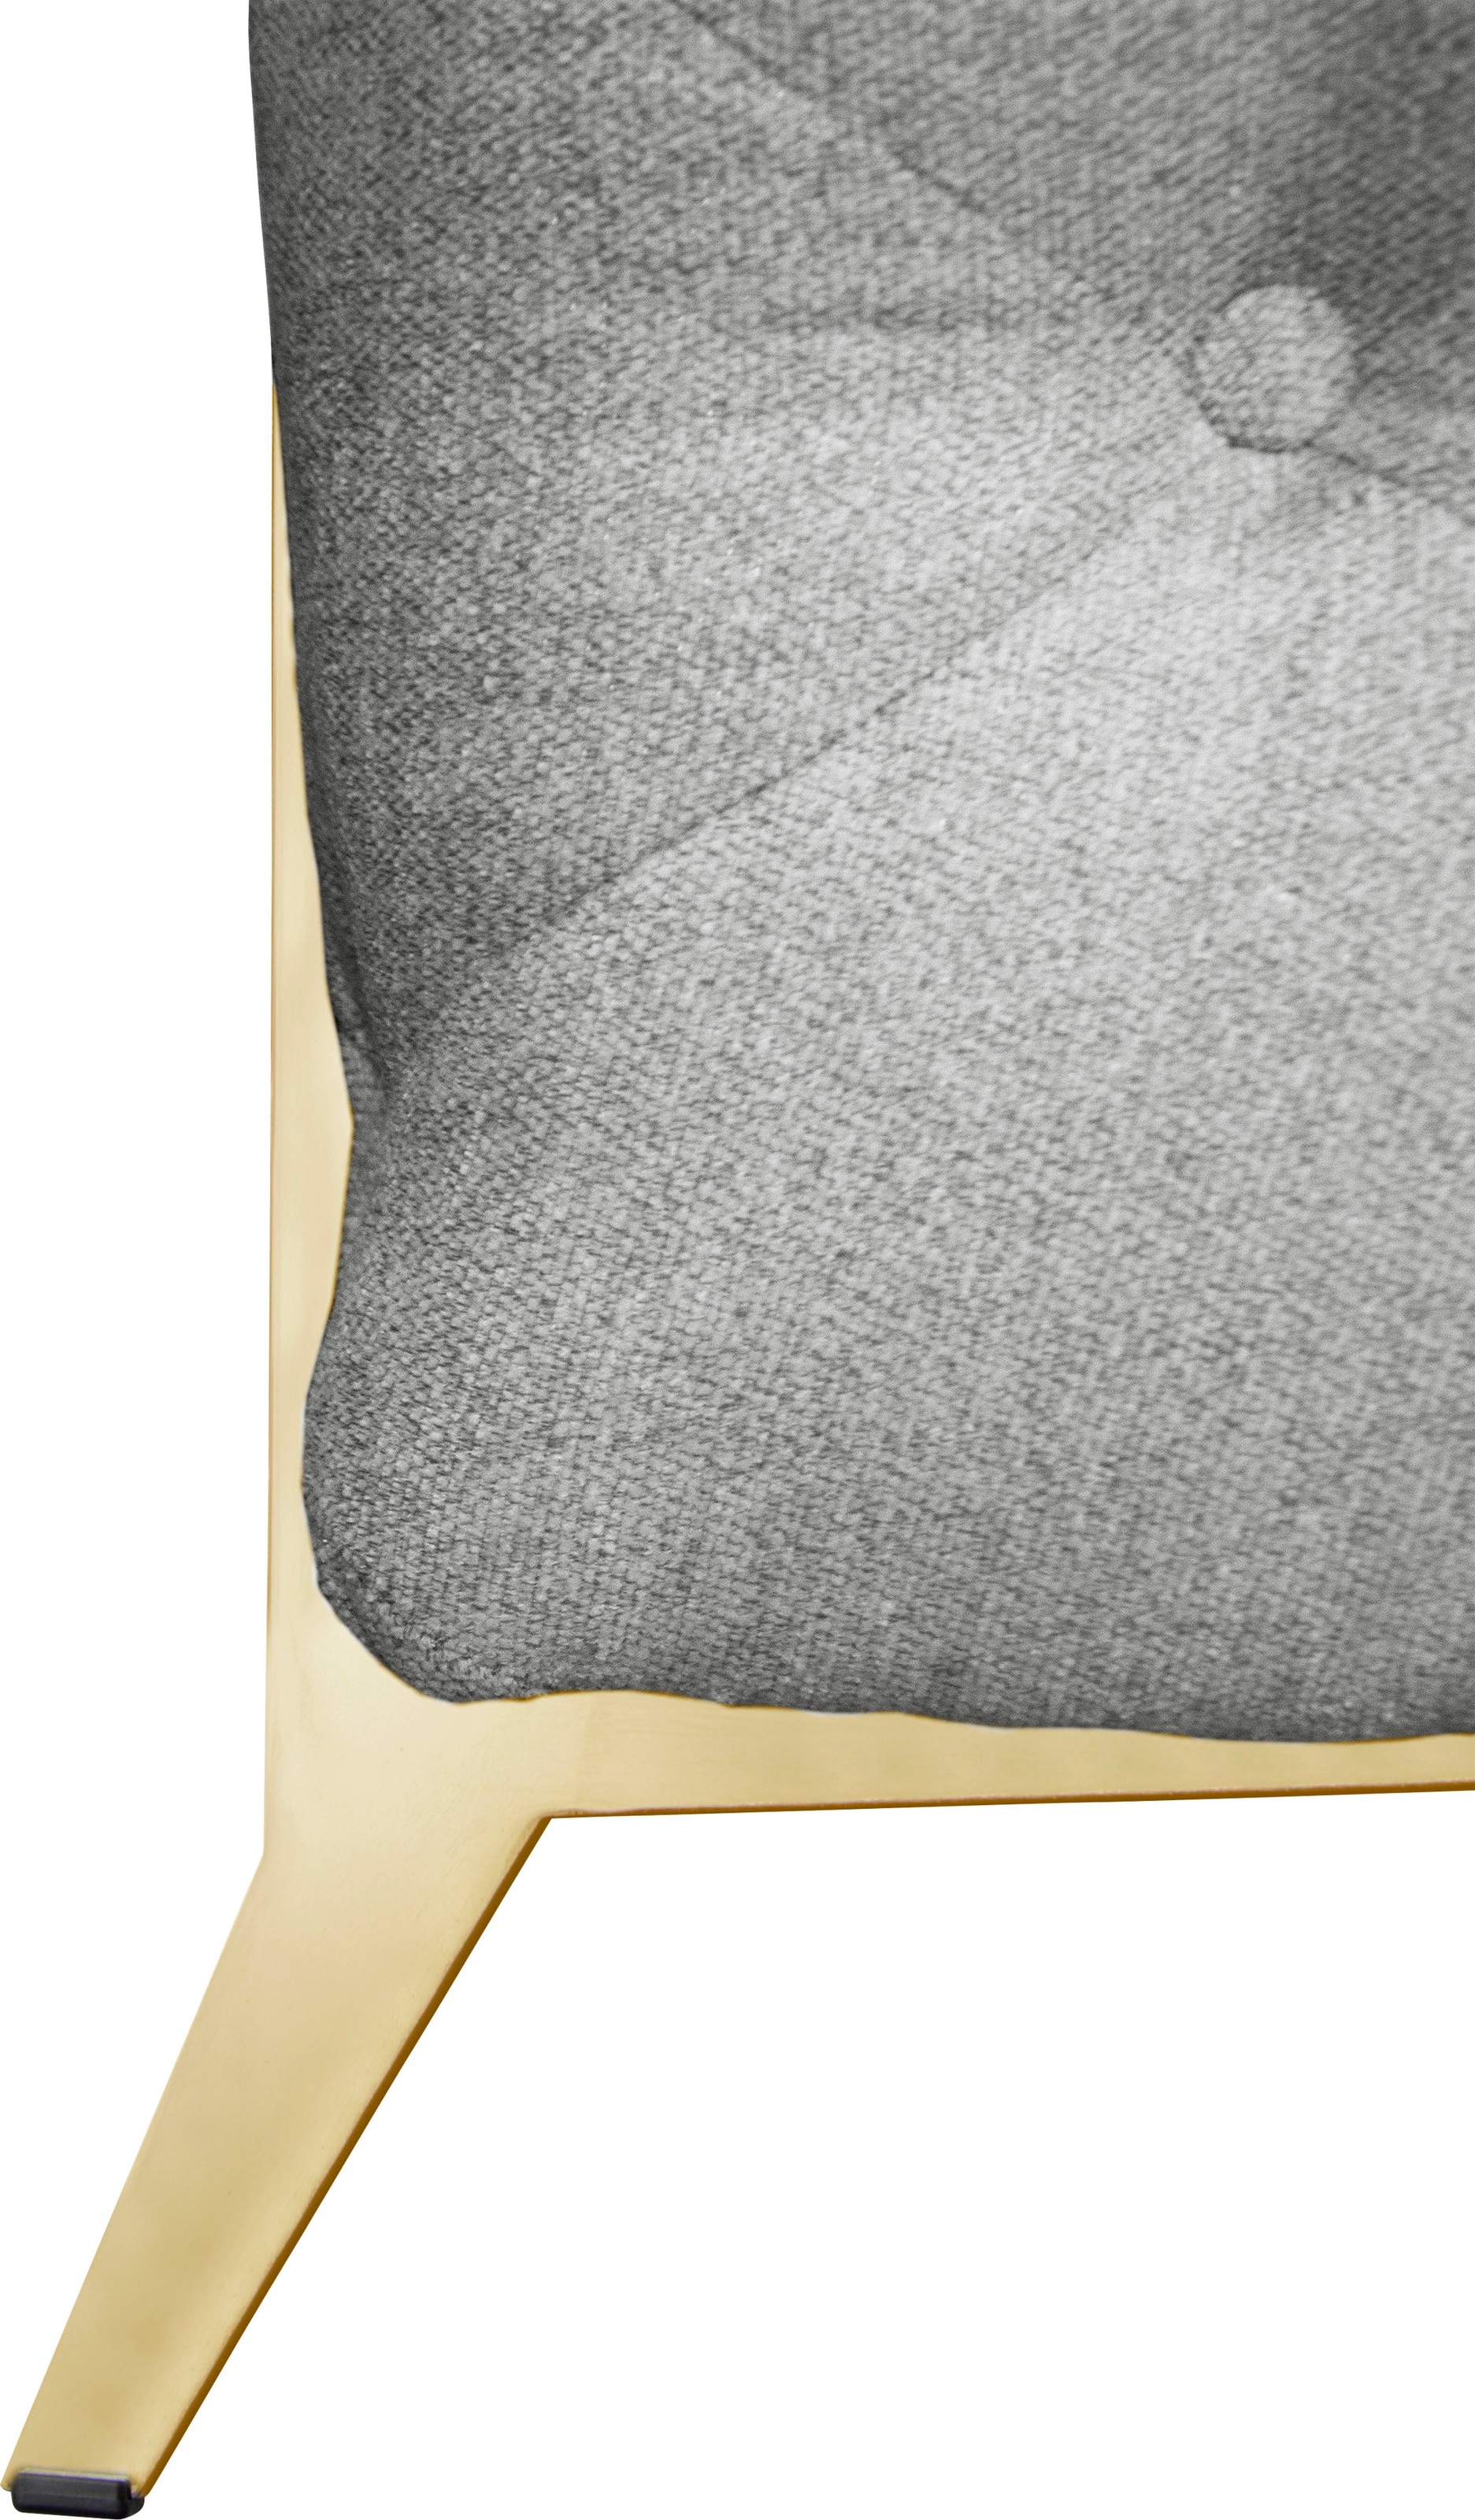 Leonique Chesterfield-Sofa »Amaury L-Form«, grosses Ecksofa, Chesterfield-Optik, Breite 323 cm, Fussfarbe wählbar